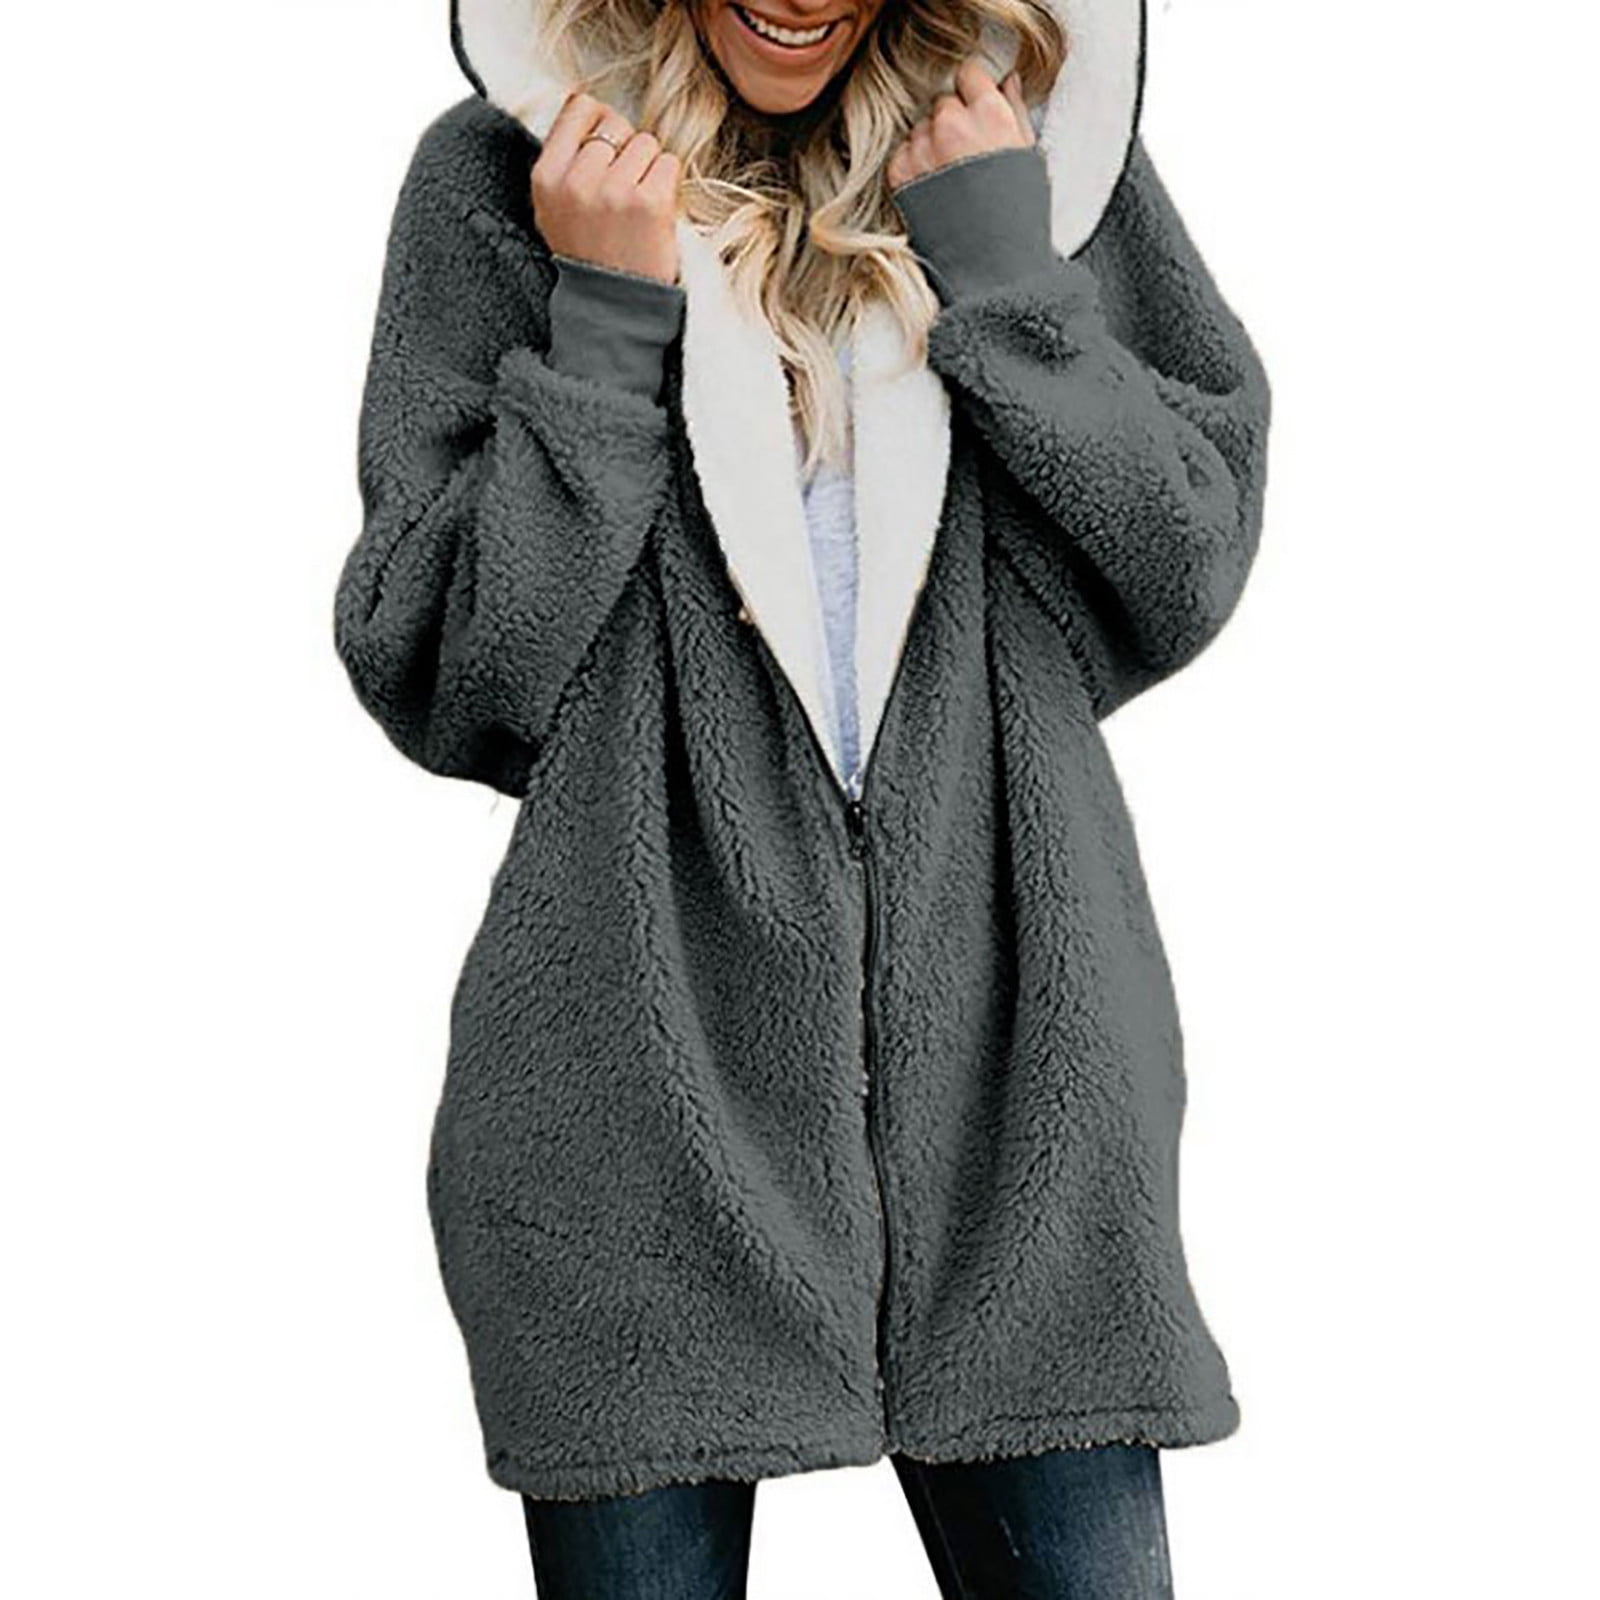 Yyeselk Women's Full Zip Up Hoodie Long Sleeve Solid Color Hooded  Sweatshirts Fleece Jacket Coat Cardigan Hoodies Blouse Shirt Tops Navy  XXXXL 